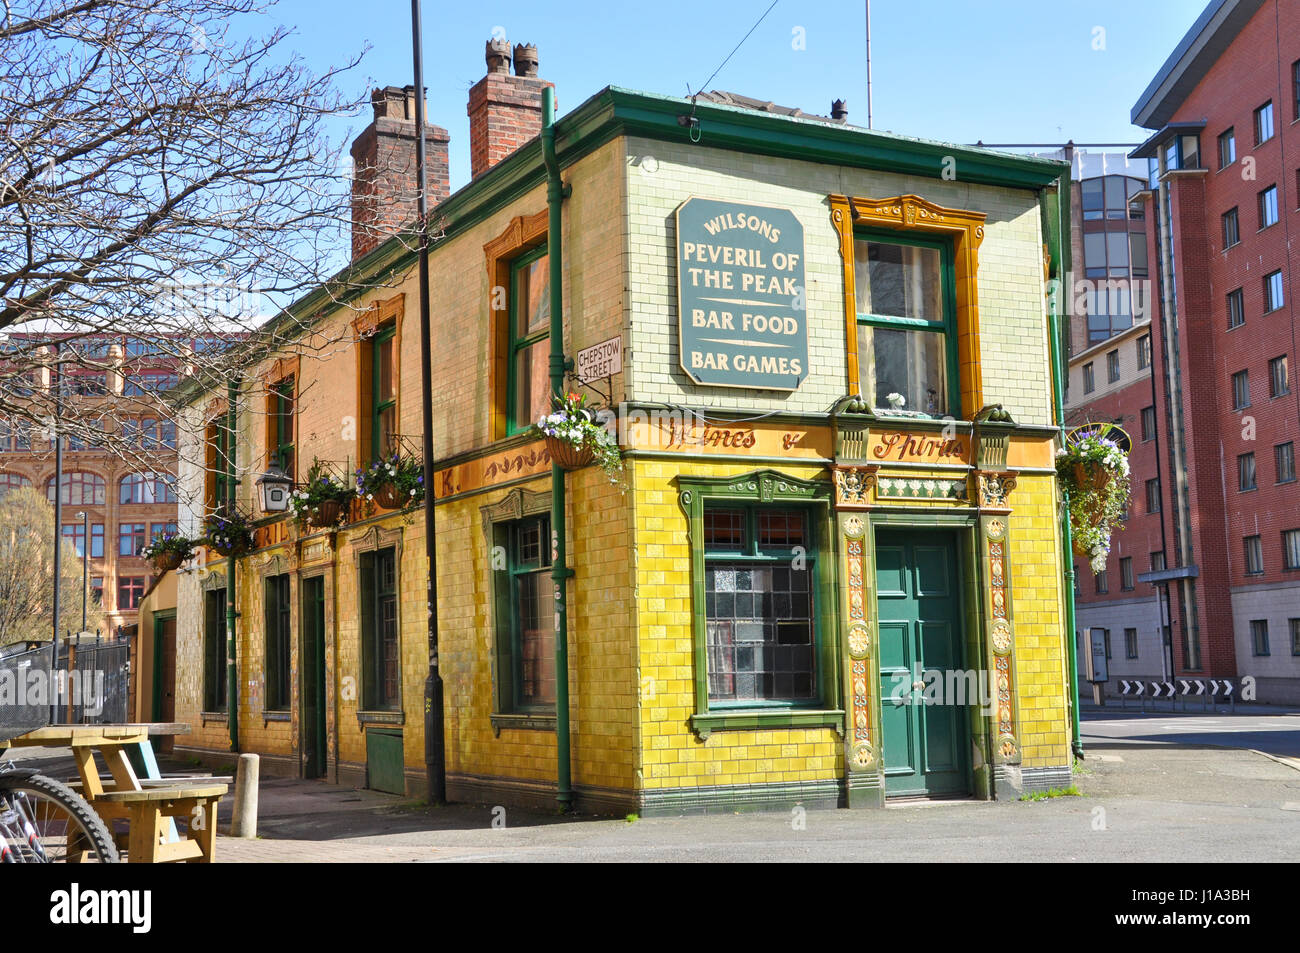 Peveril of the Peak pub, famous historic  pub, Manchester, UK Stock Photo